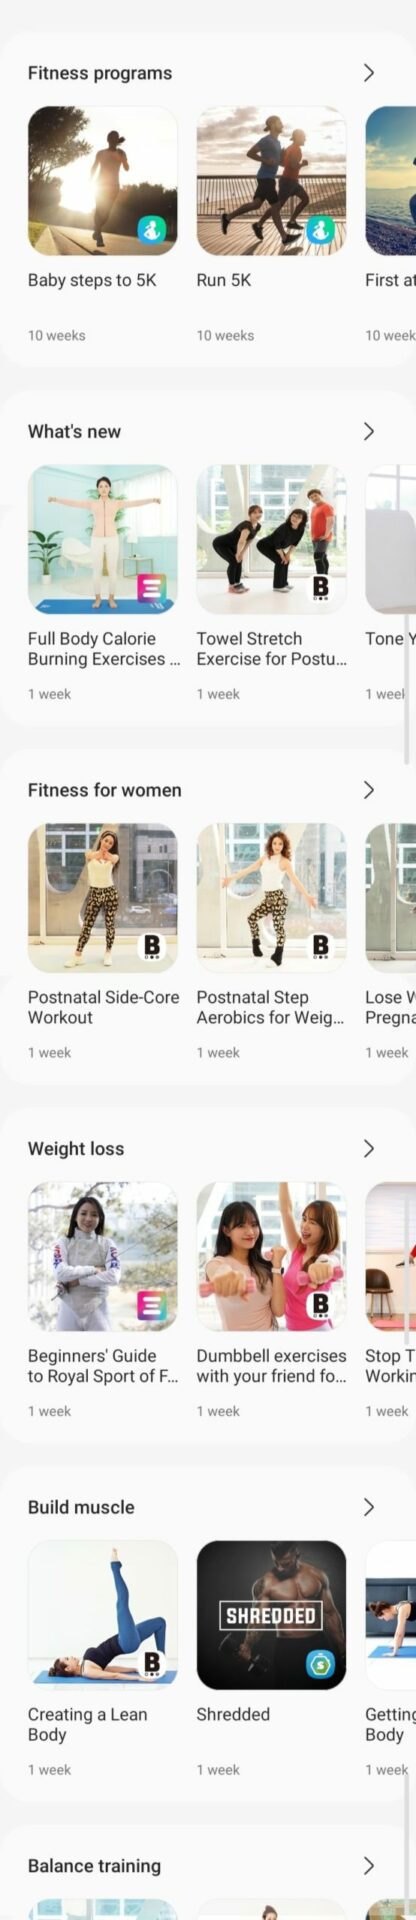 fitness programs in samsung health app